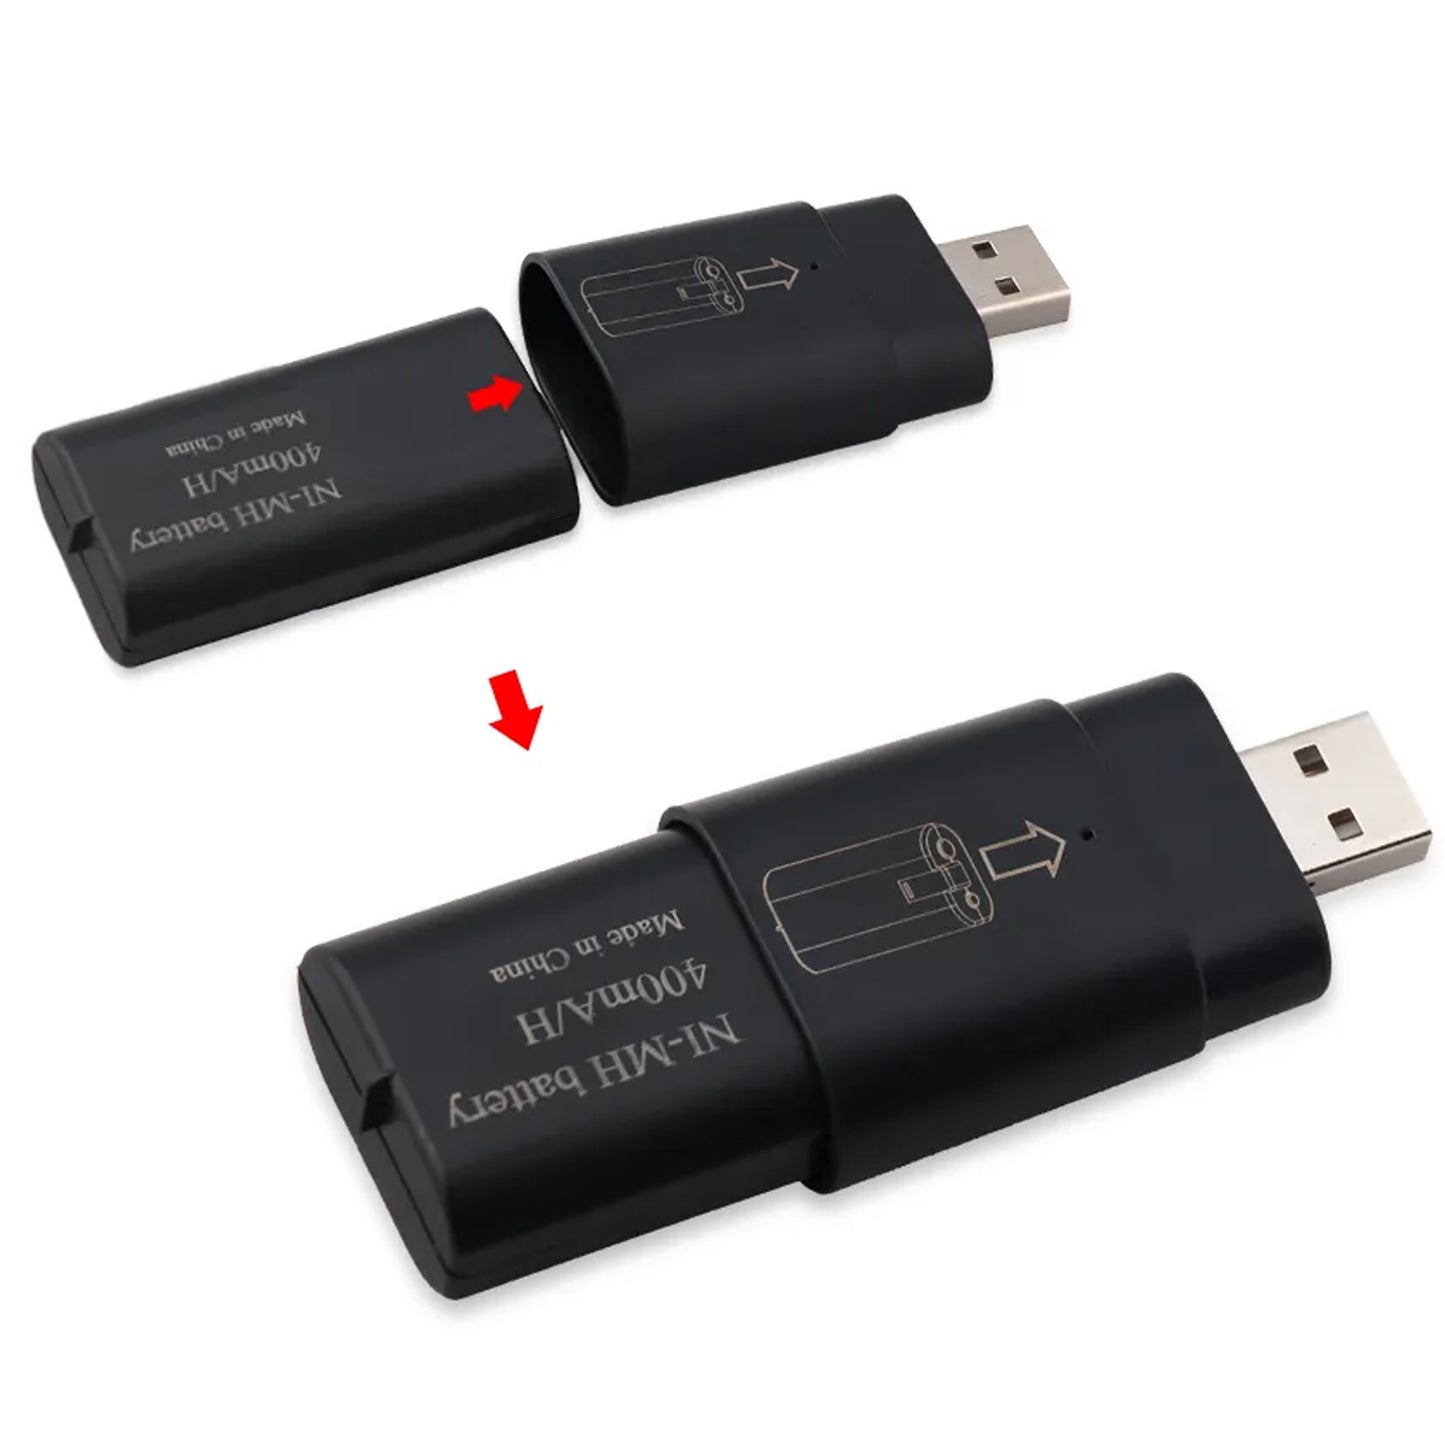 KIT Carga Y Juega Interna Doble Con Cargador USB TYX-588